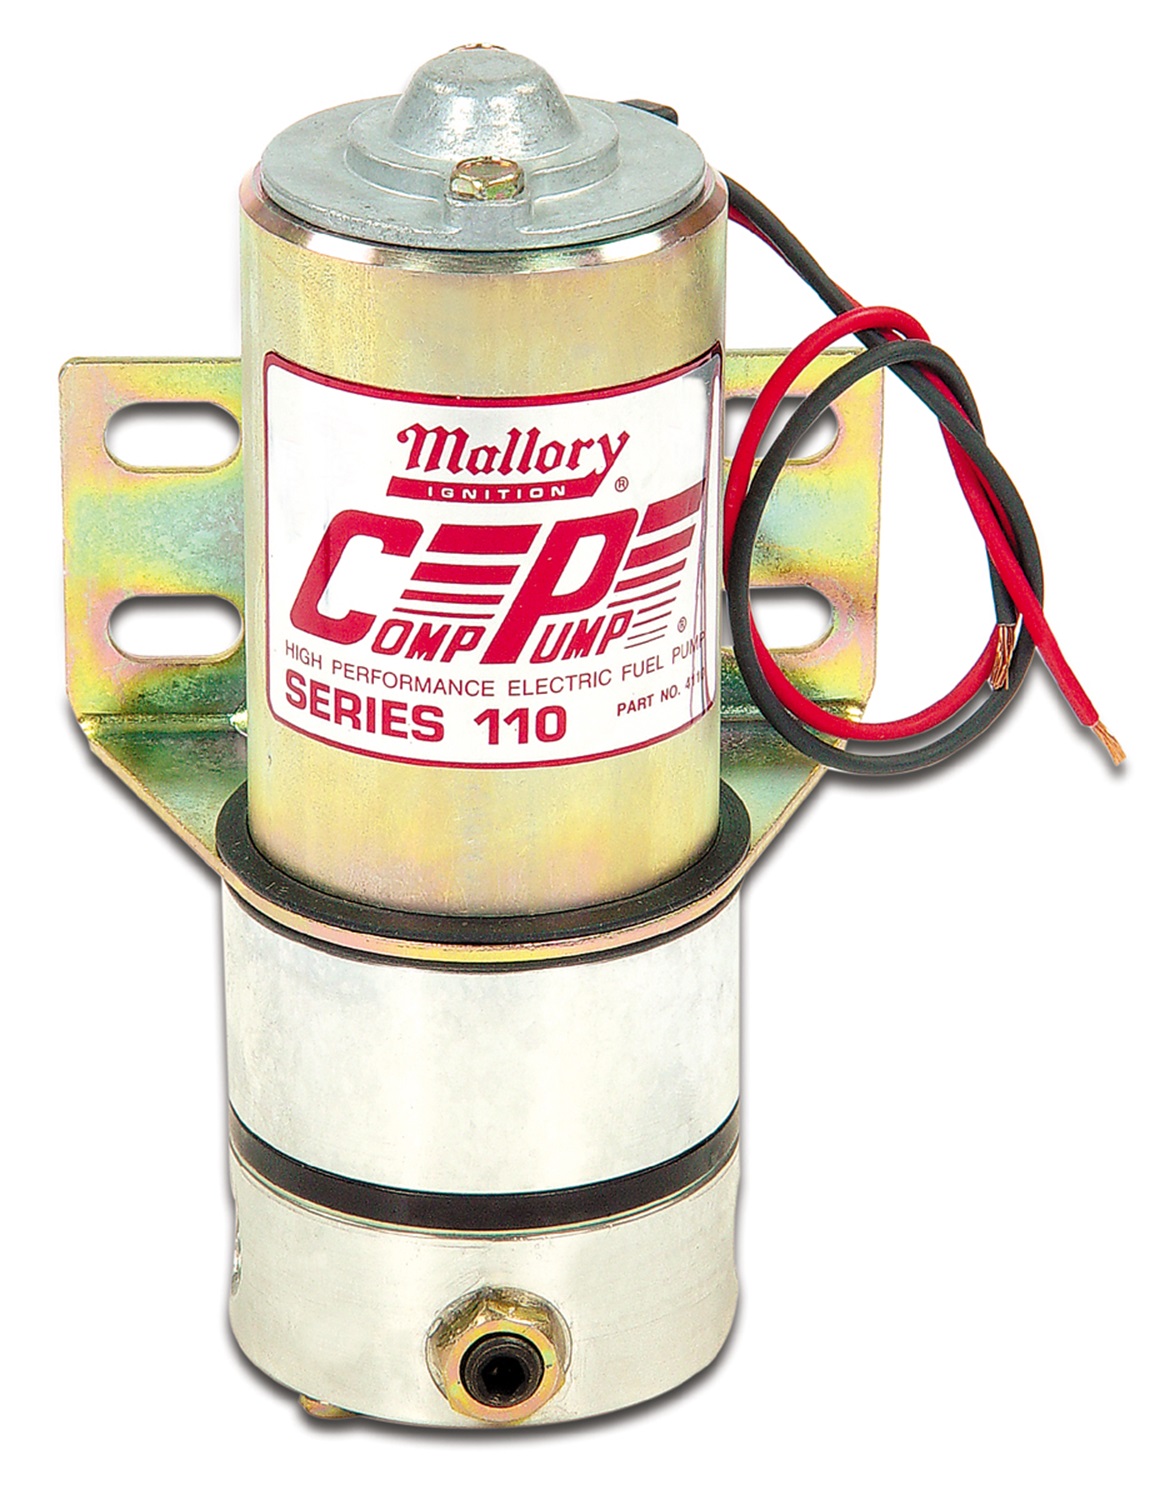 Mallory Mallory 4110 Comp Pump Series 110